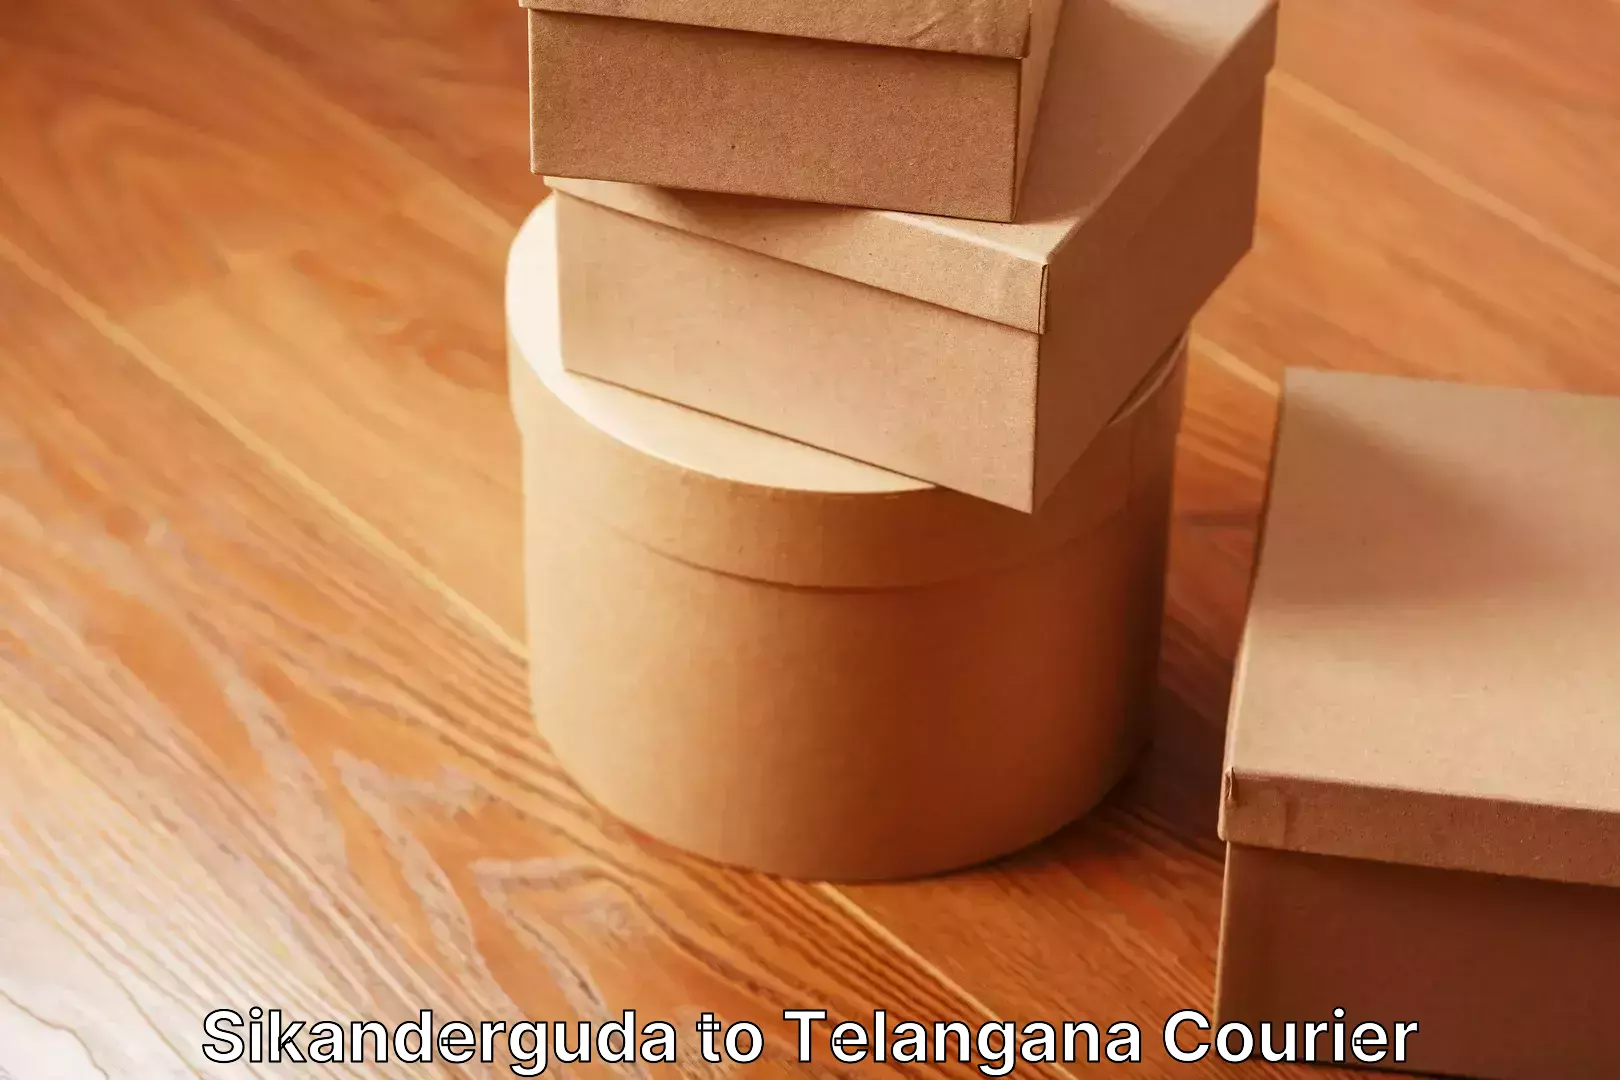 Moving and packing experts Sikanderguda to Telangana